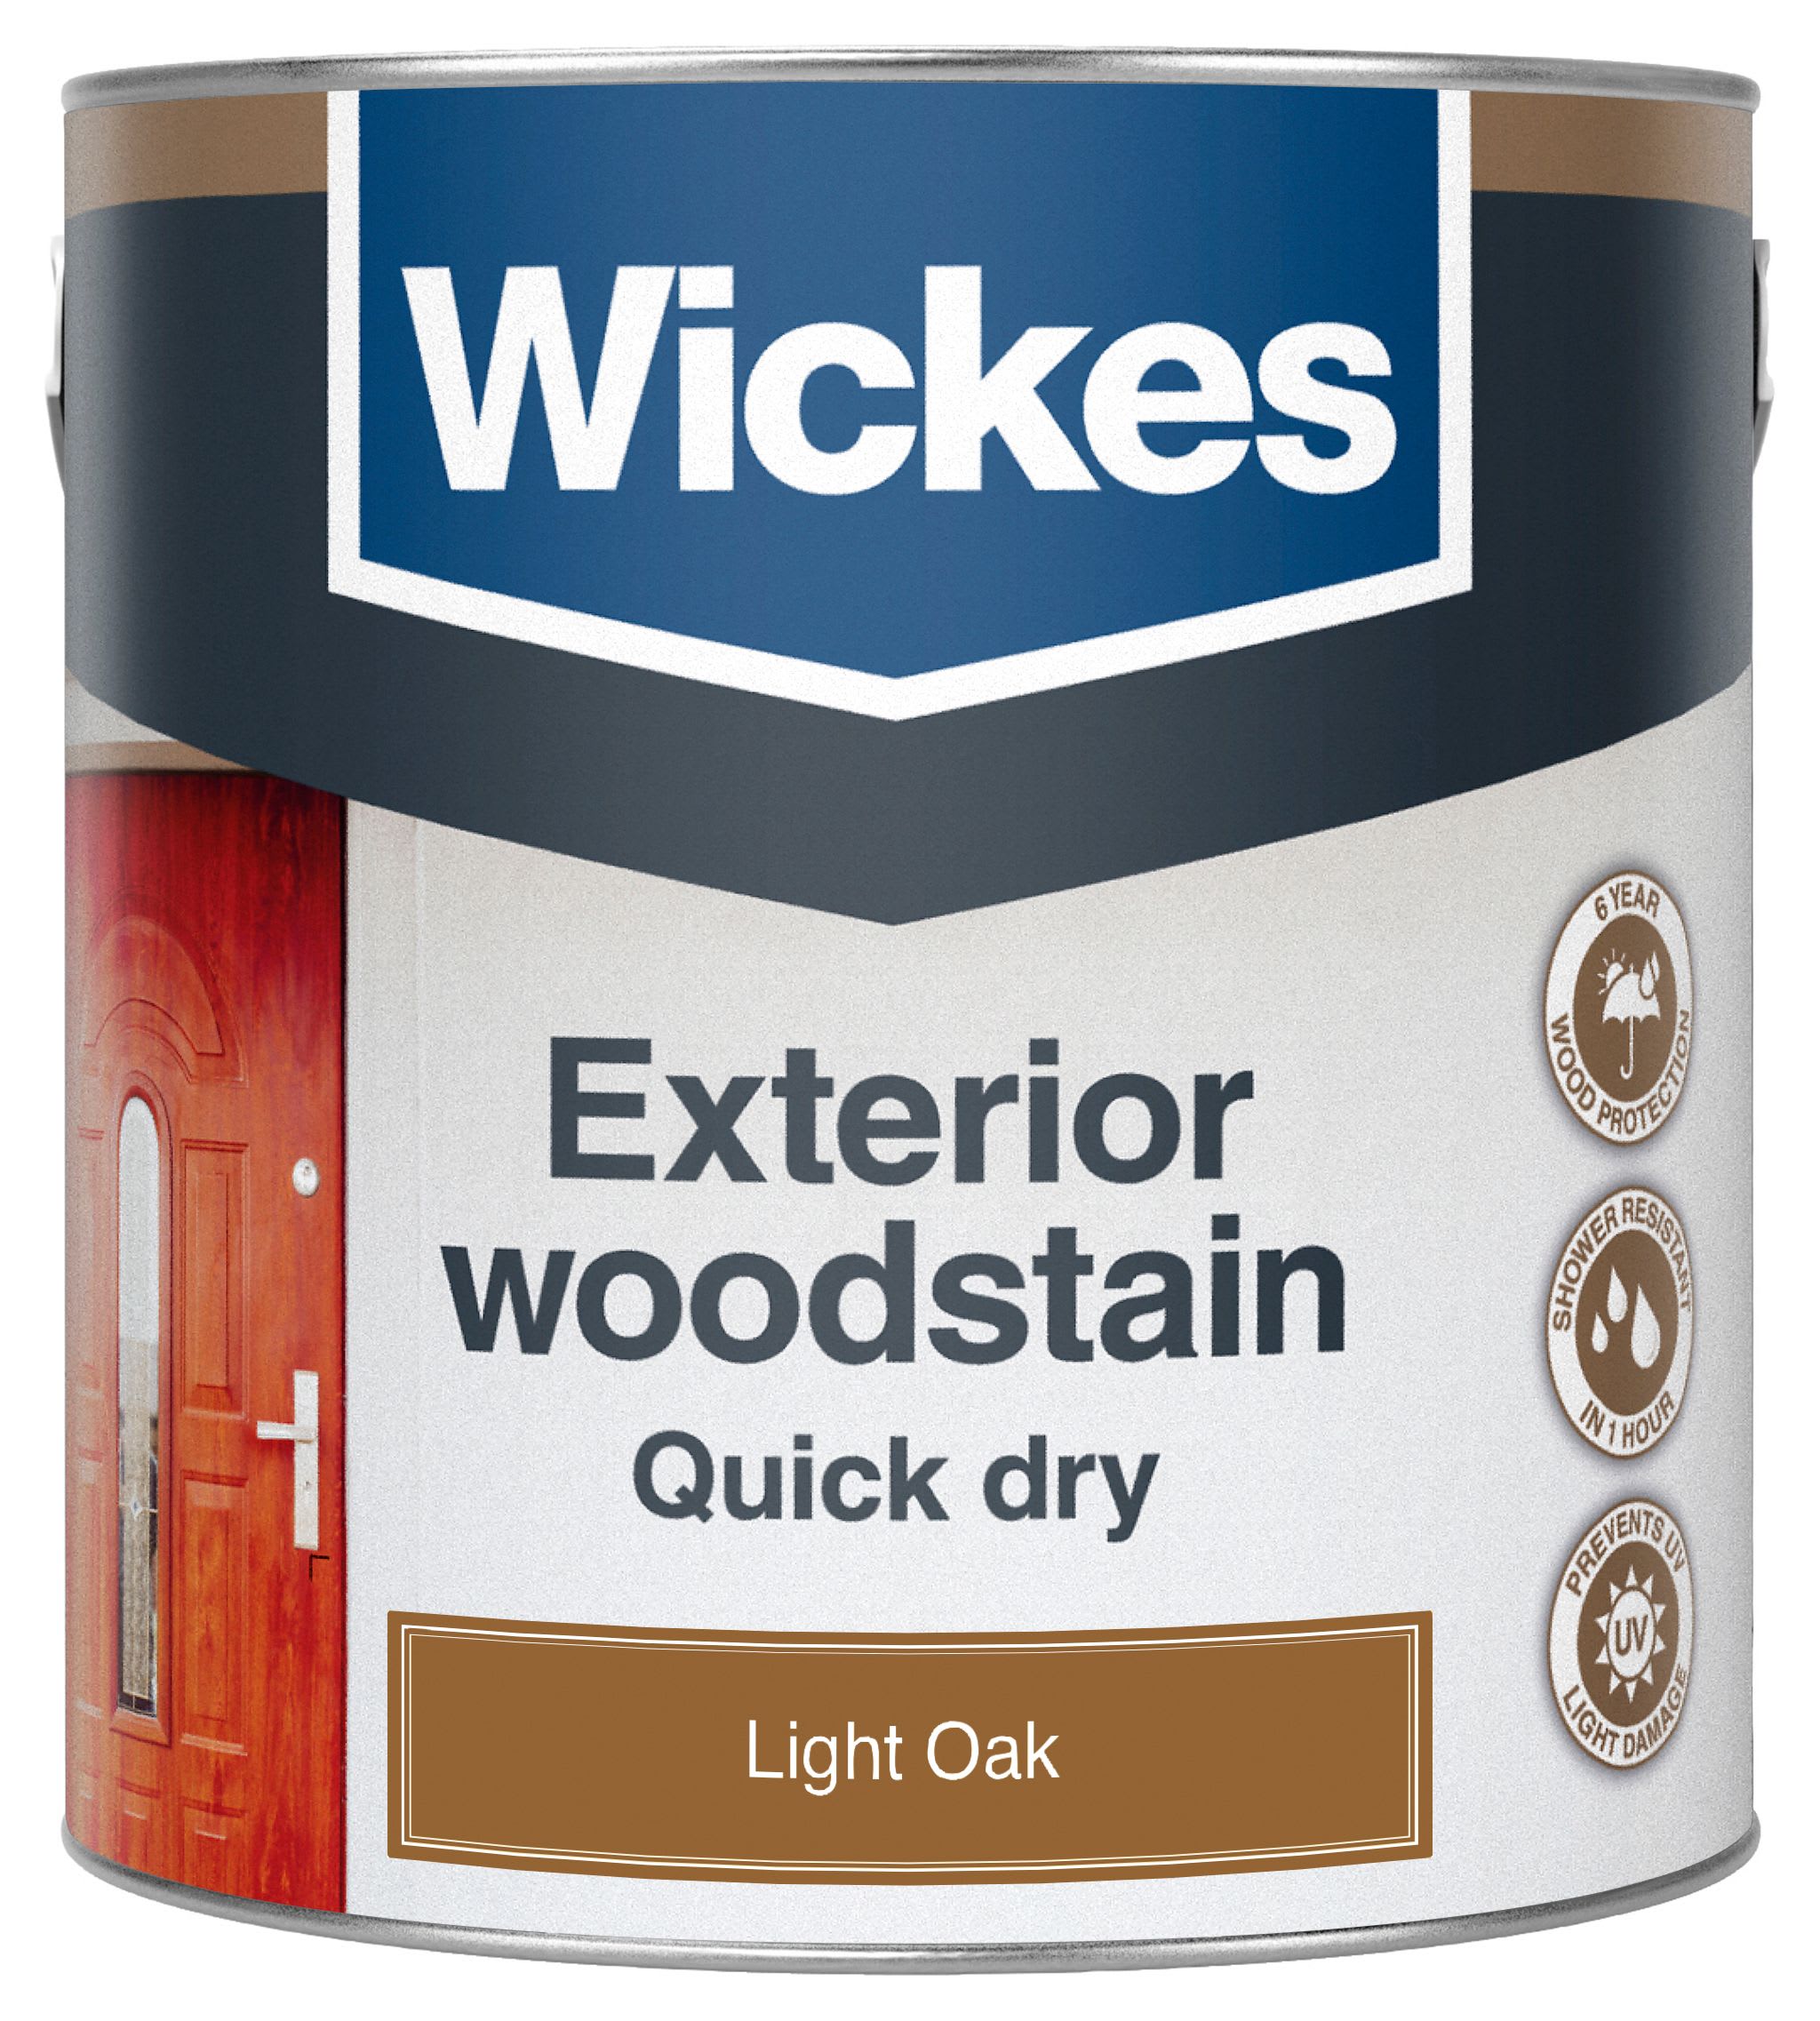 Wickes Exterior Quick Woodstain - Light Oak - 2.5L | Wickes.co.uk